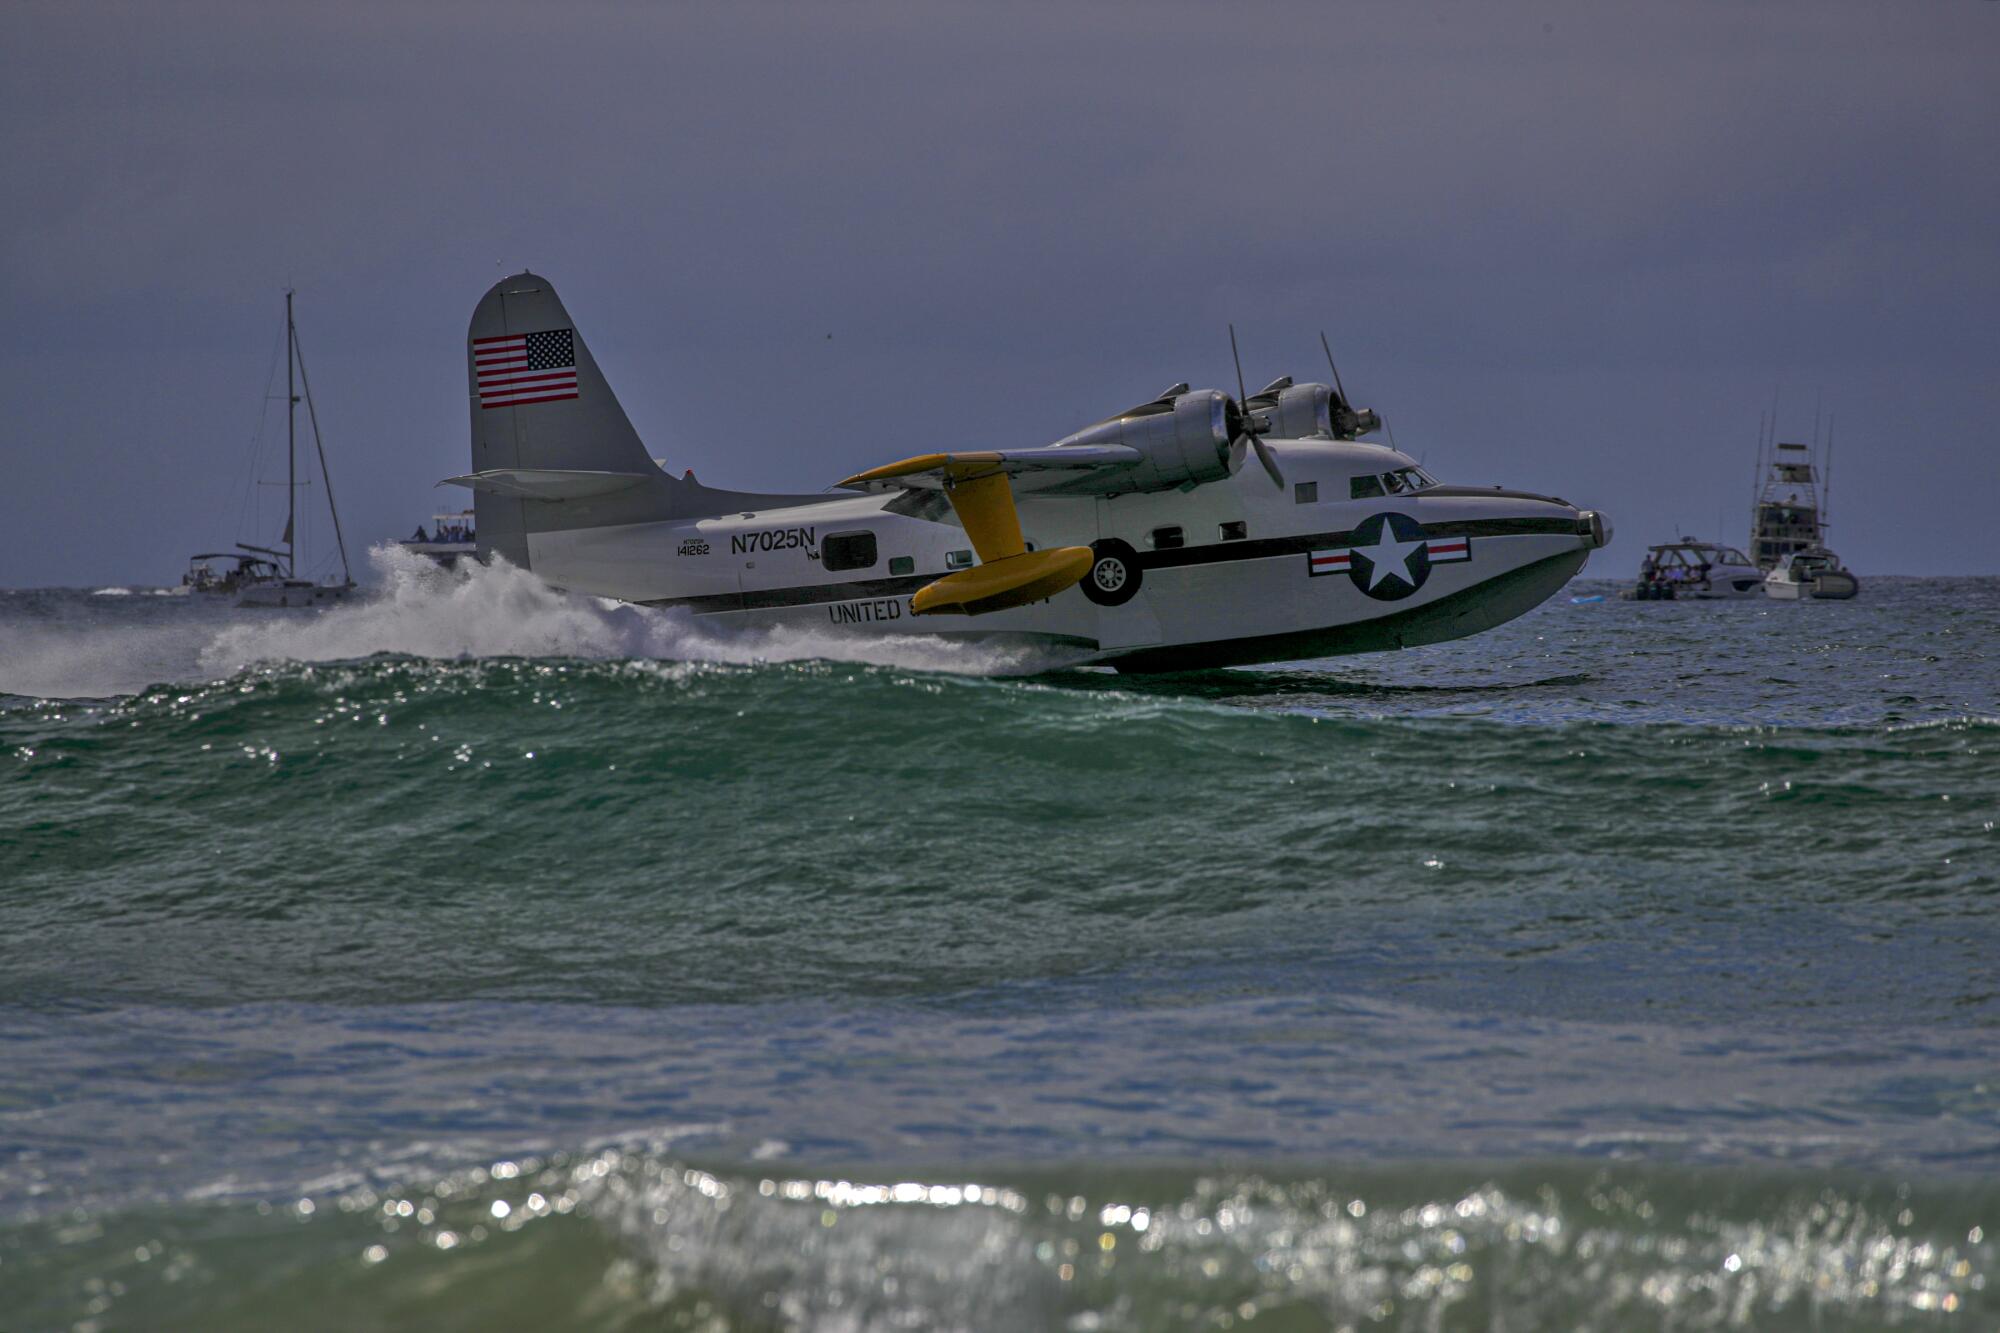 Grumman Albatross seaplane skims the surface